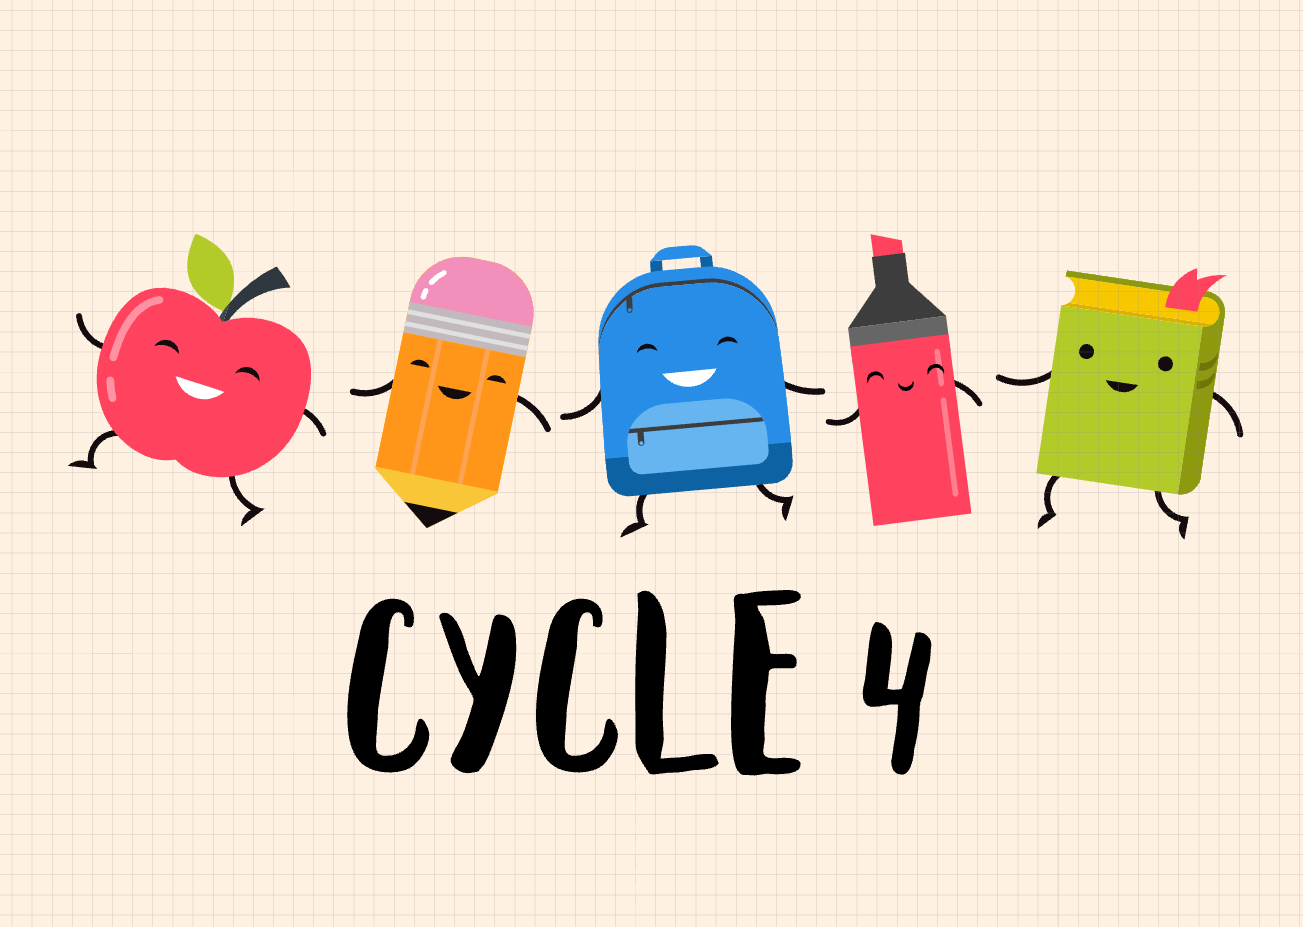 Cycle 4